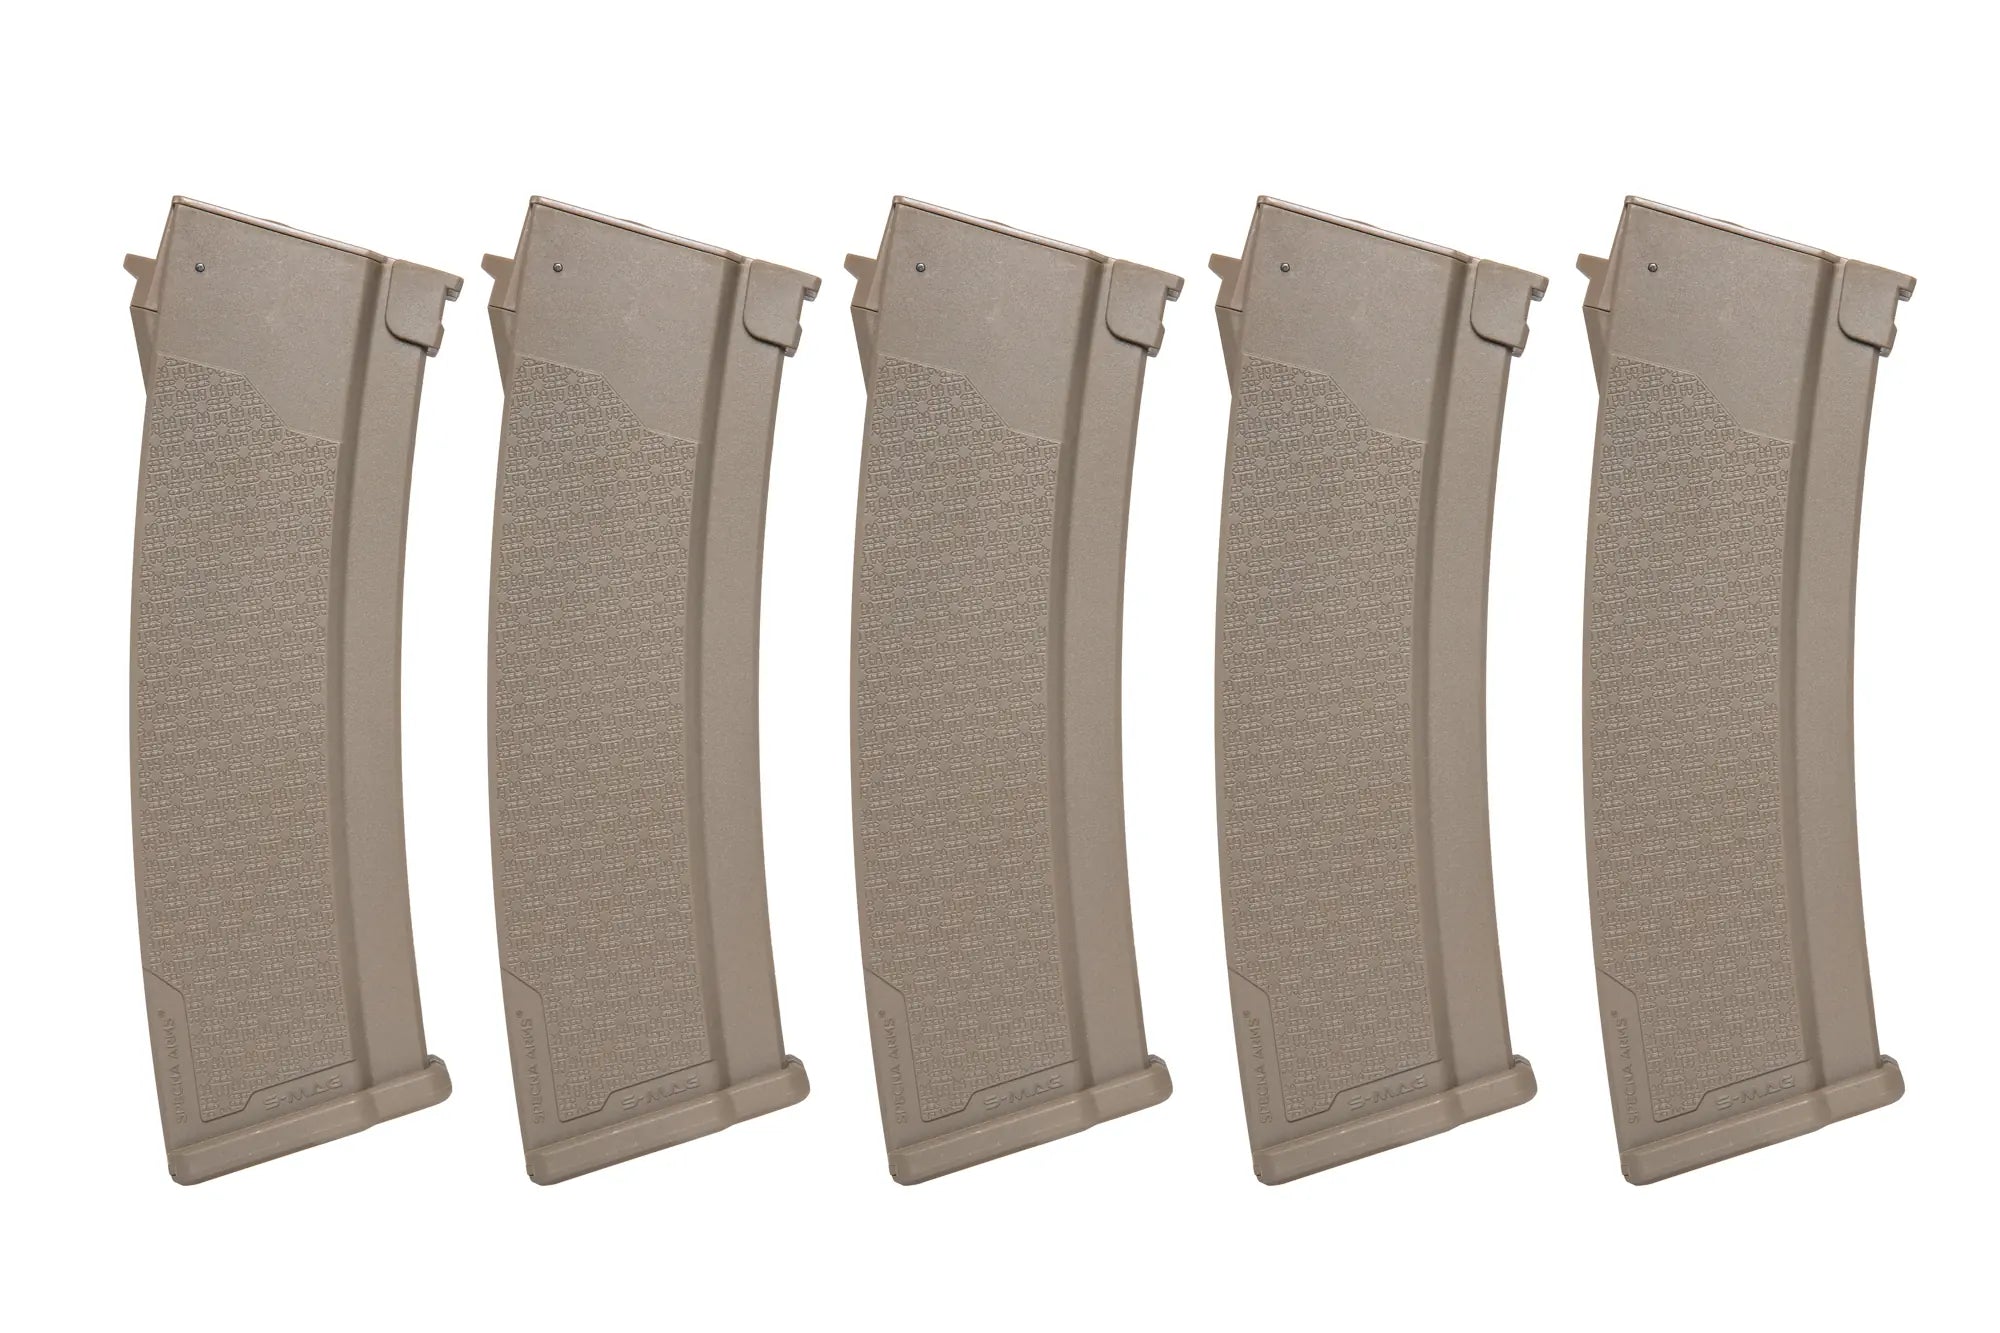 Set of 5 Mid-Cap S-Mag magazines for J series 175 pellets Tan-3